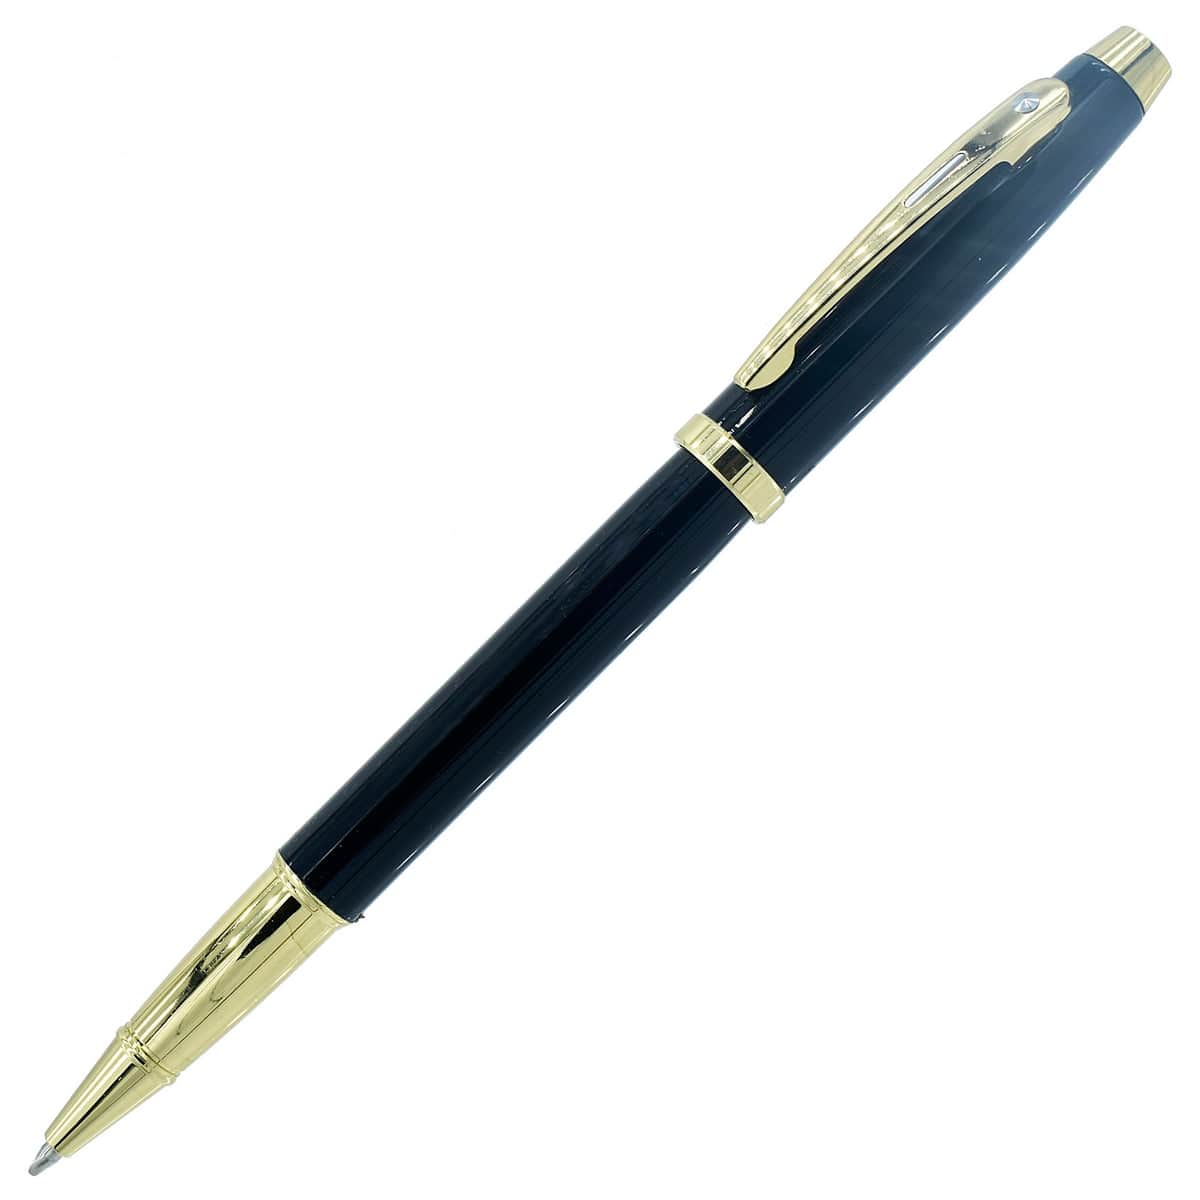 jags-mumbai Pen Roller Pen Blister Packing Black Gold Clip